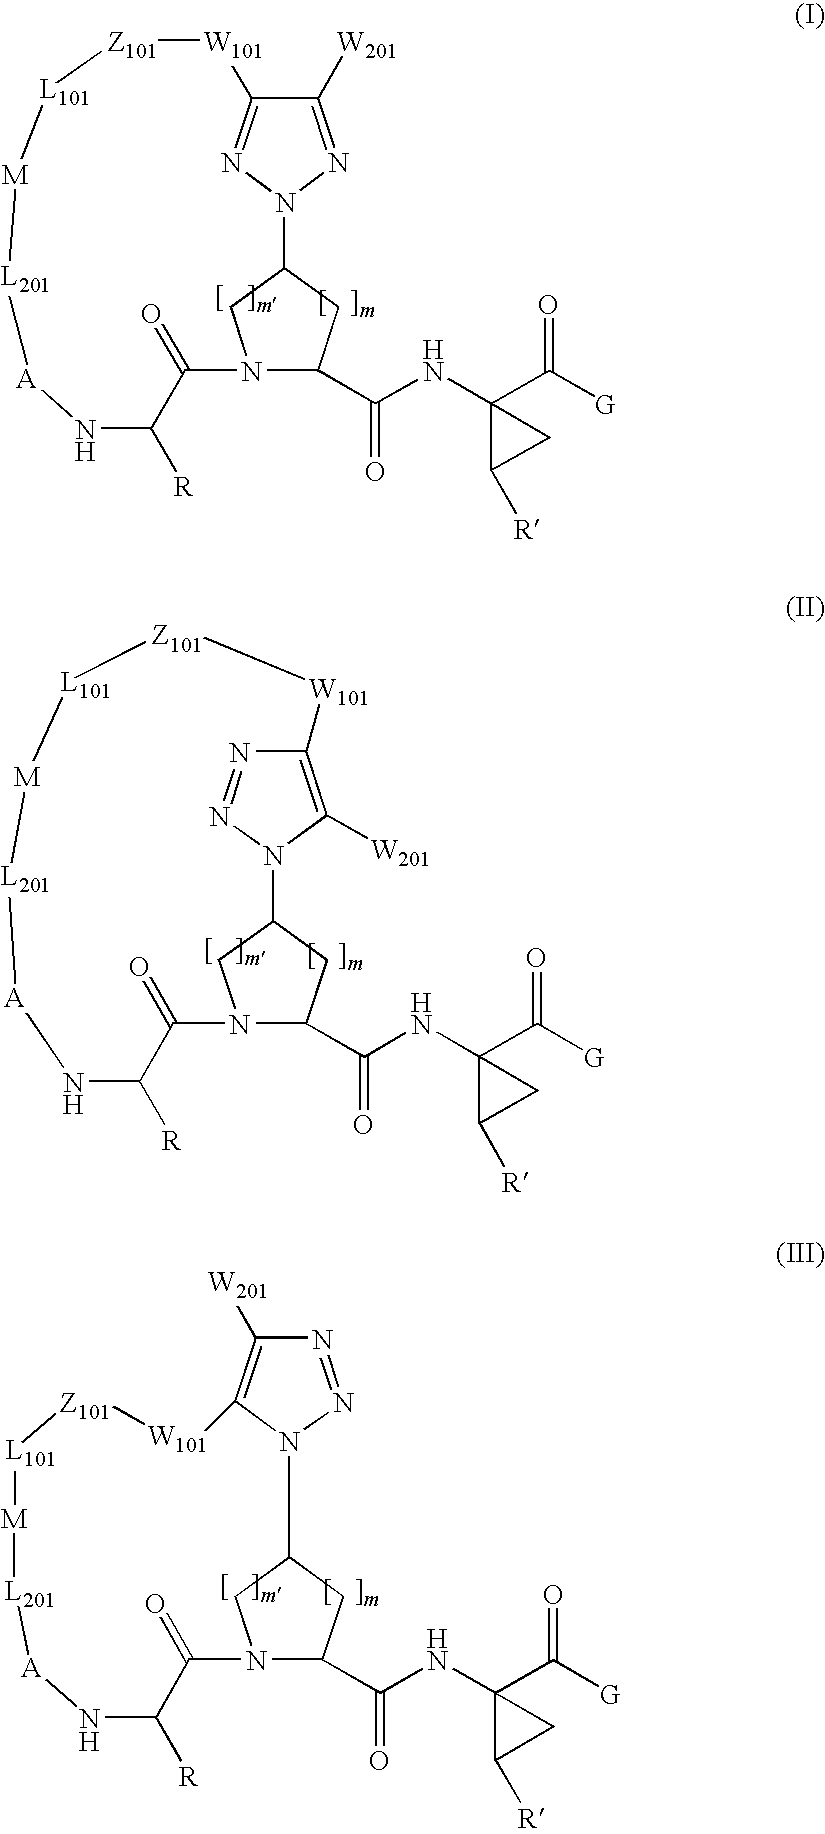 Triazole-containing macrocyclic hcv serine protease inhibitors